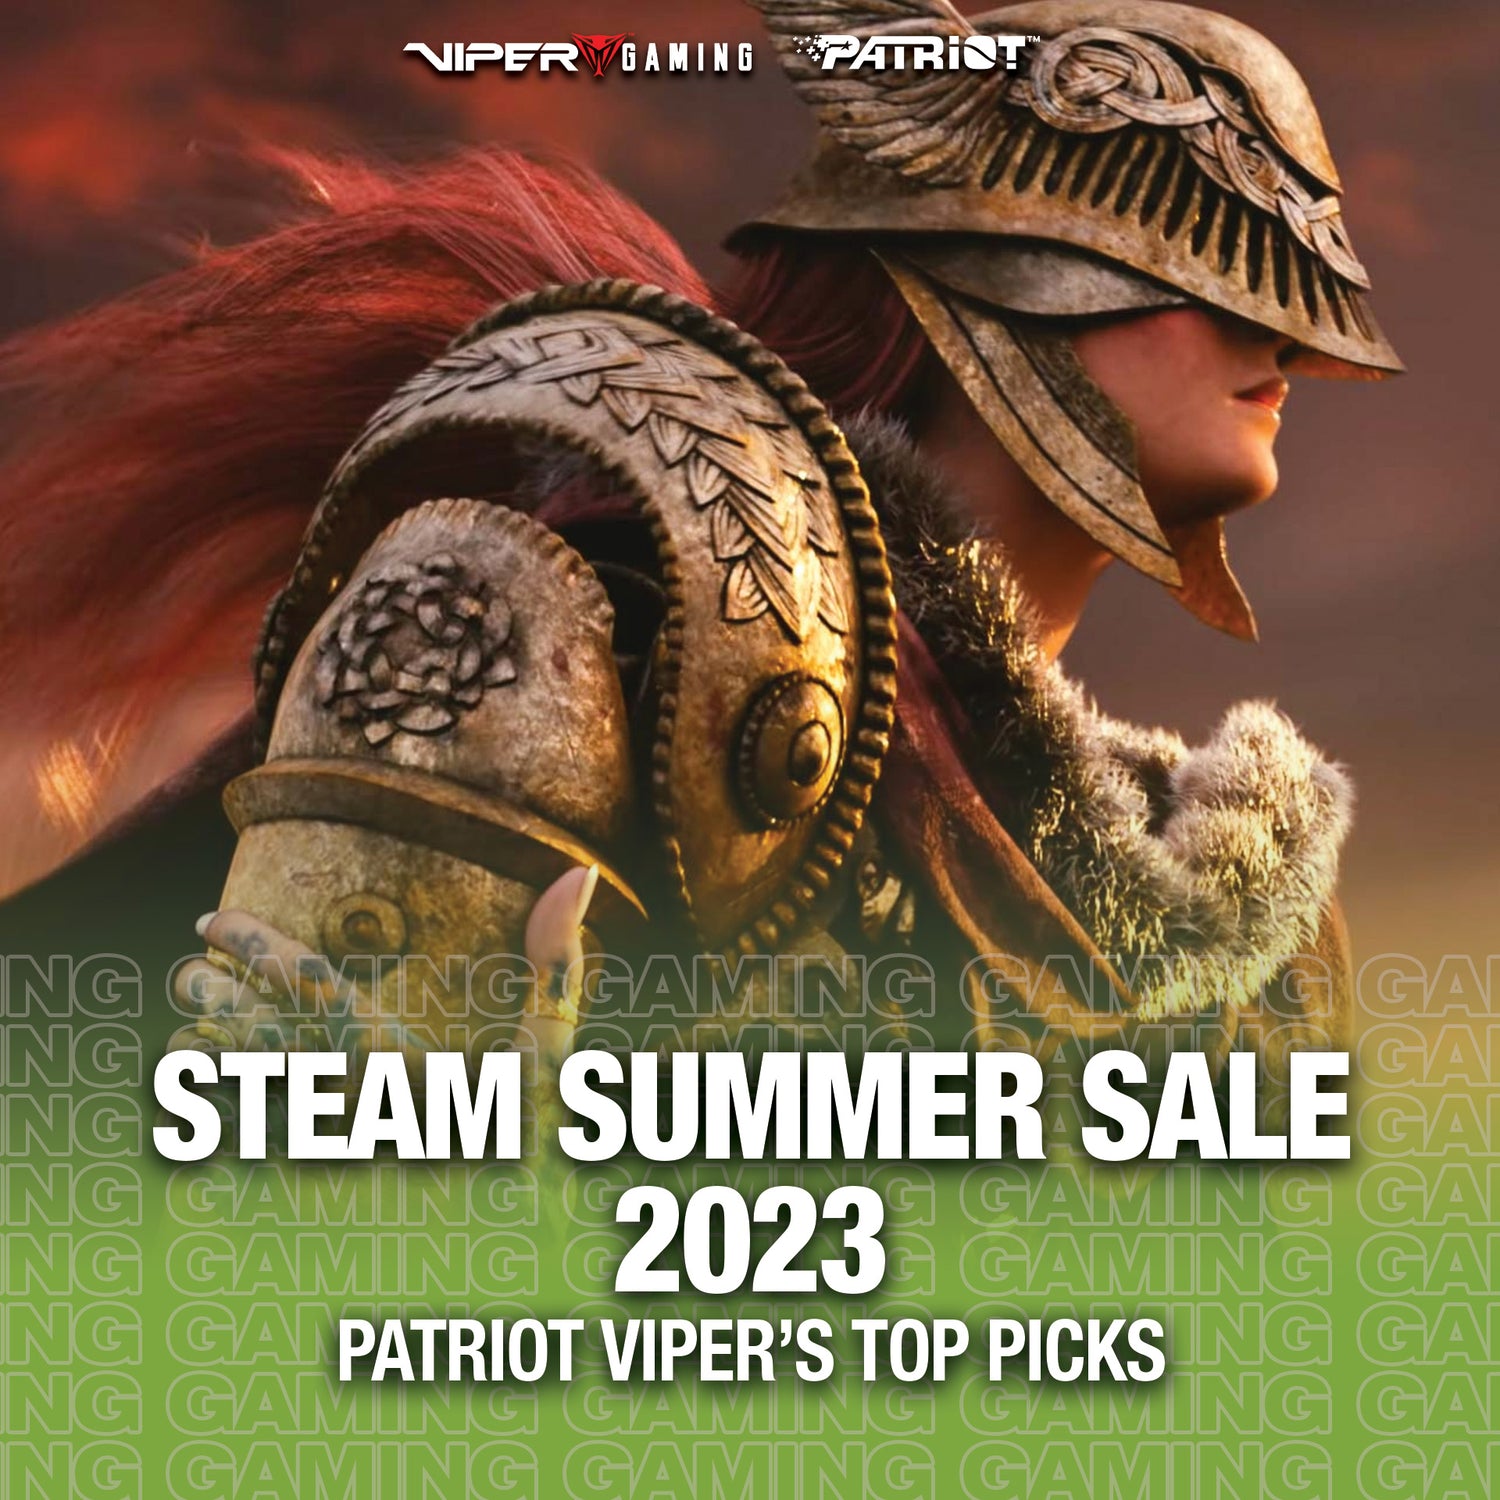 Steam Summer Sale: Patriot Viper's Top Picks